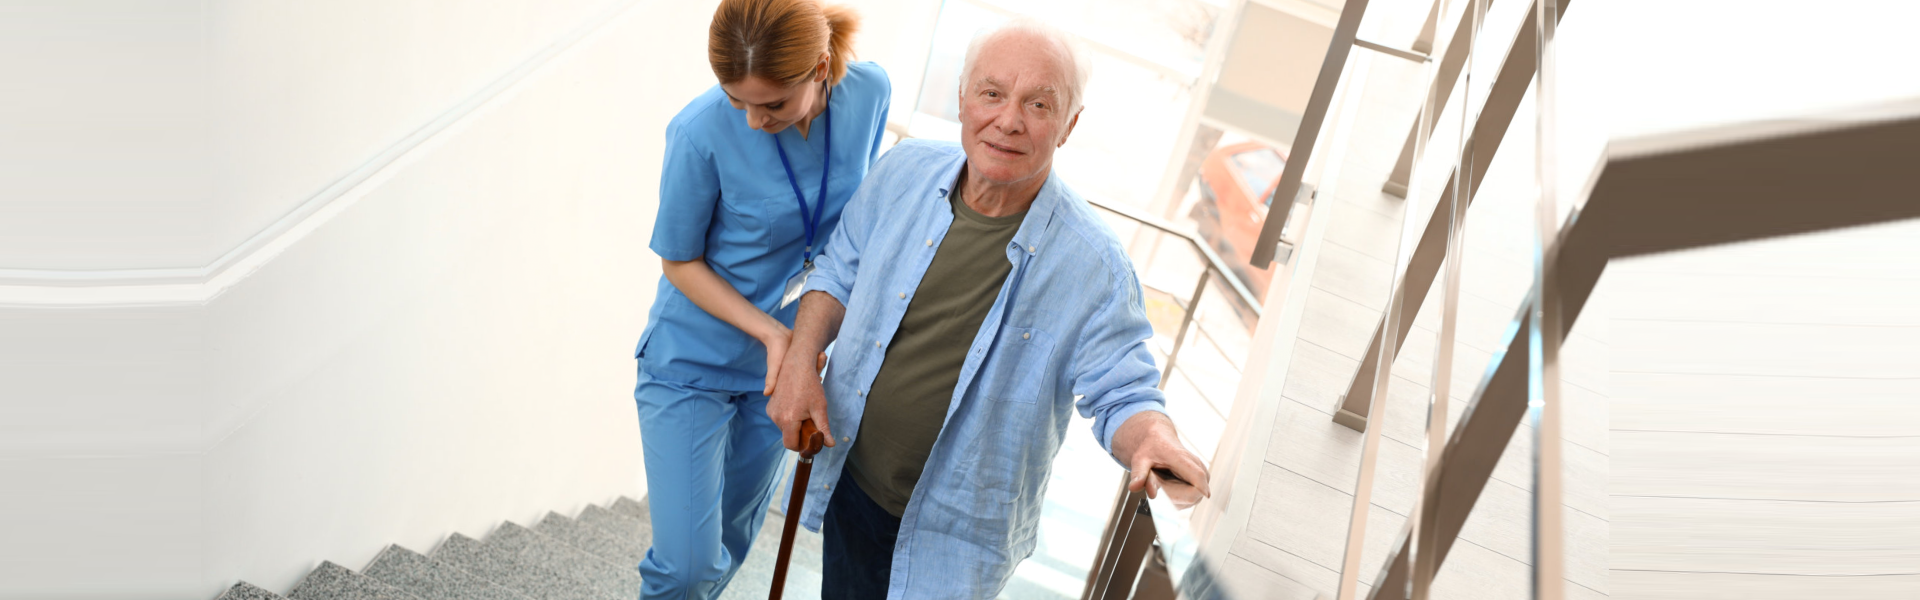 Caregiver helping elderly